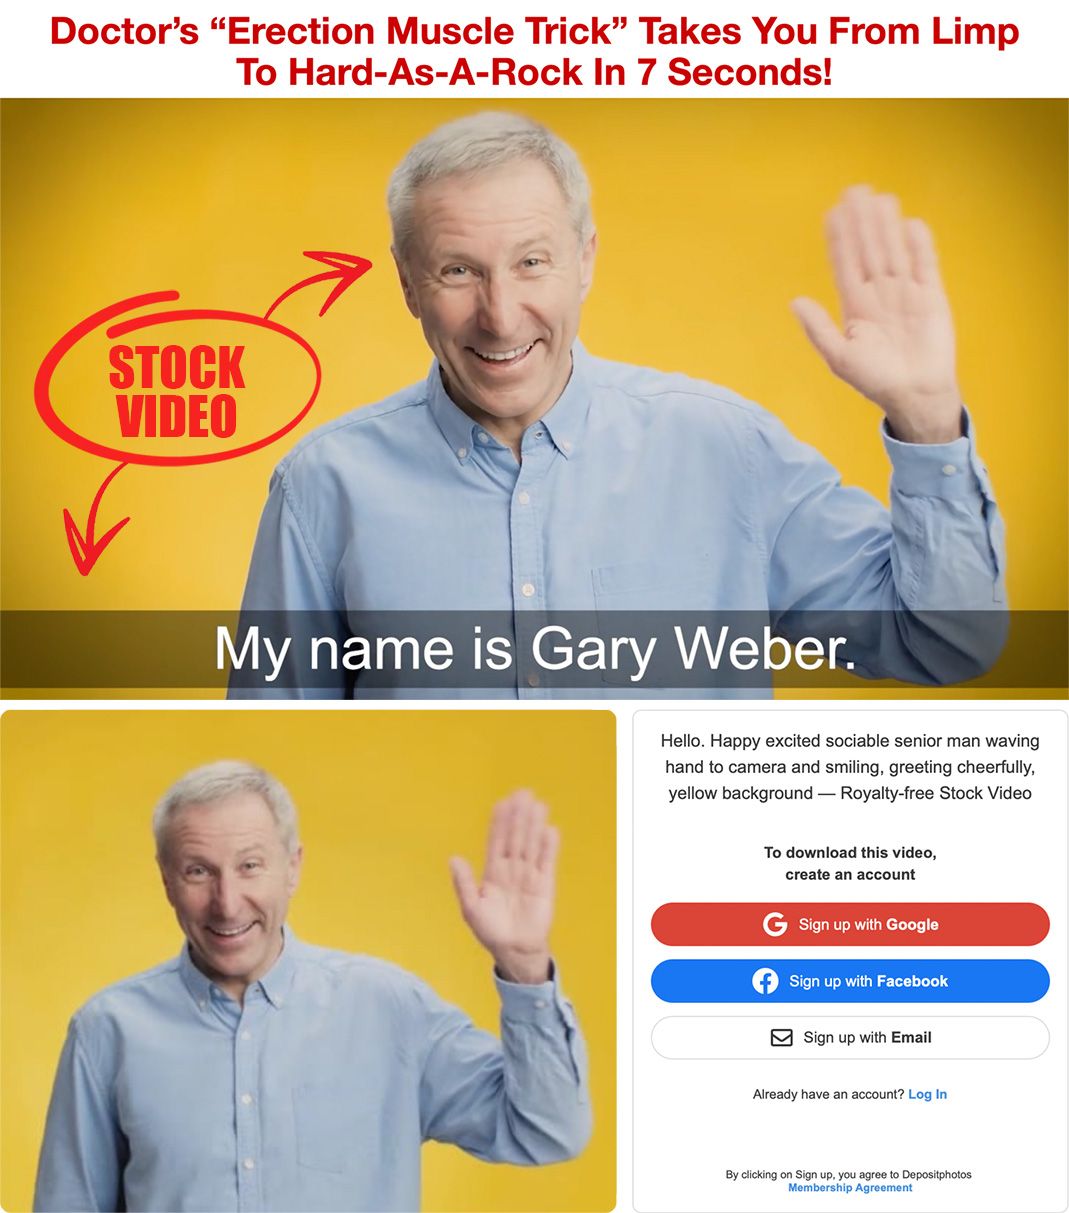 Google stock video - Gary Weber